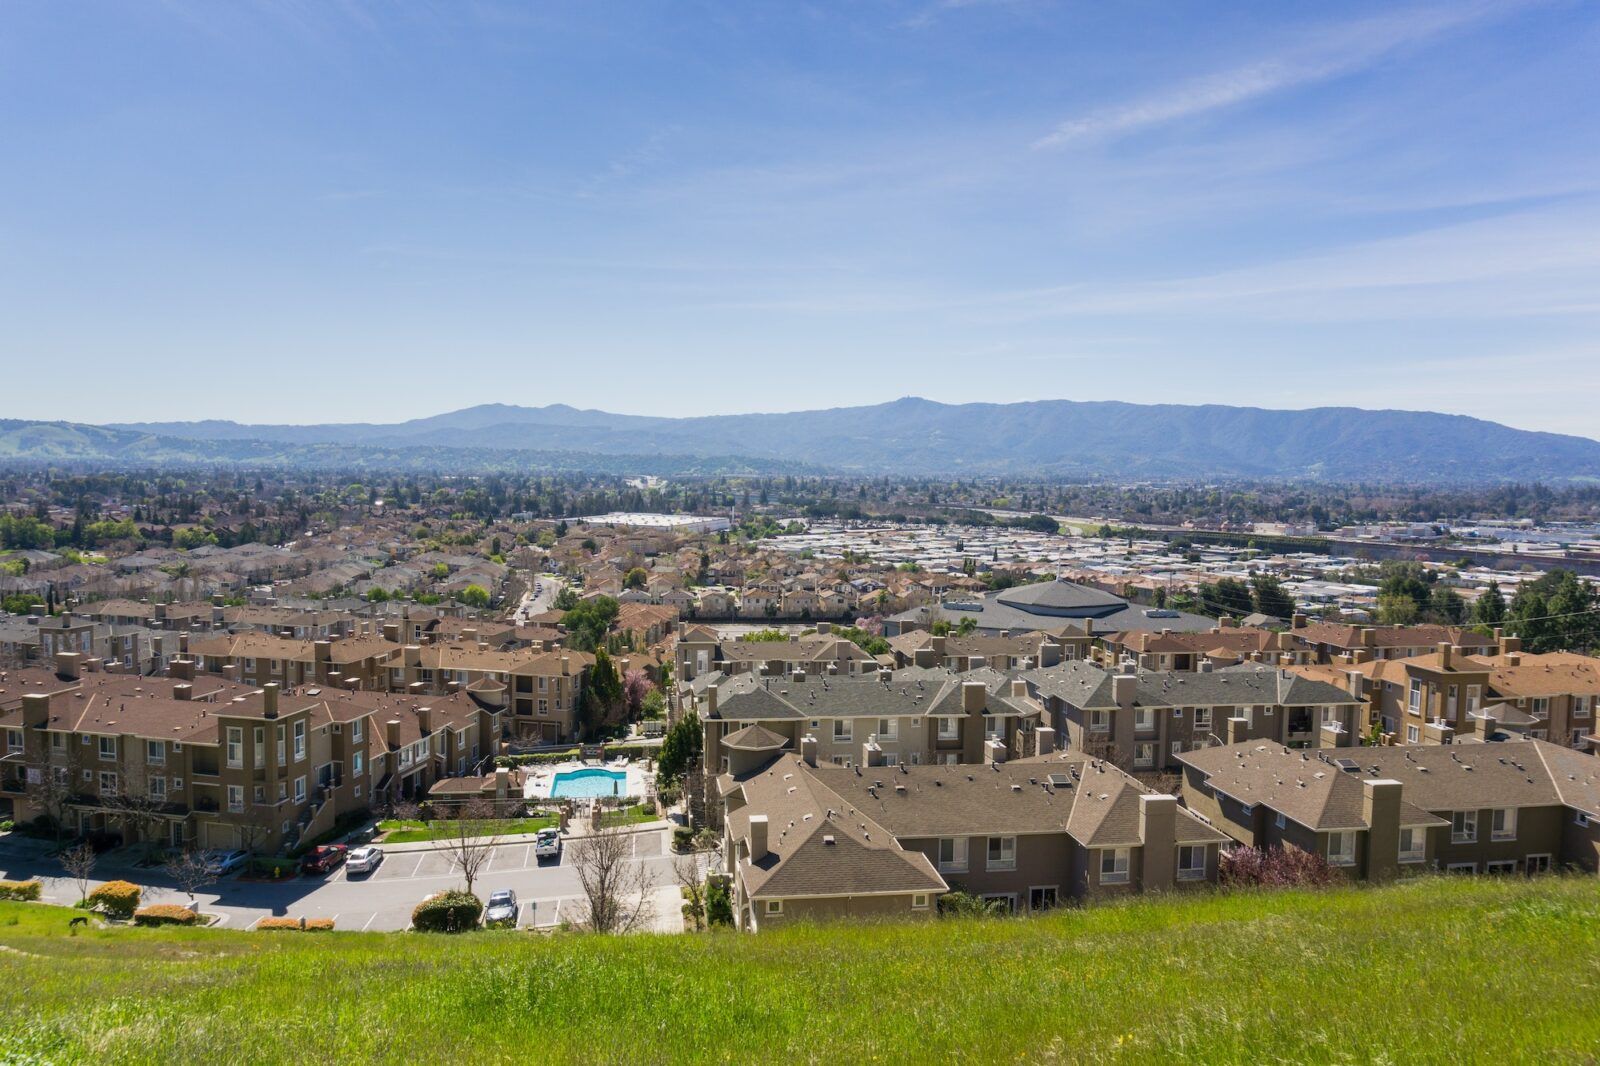 Aerial view of residential neighborhood, San Jose, California